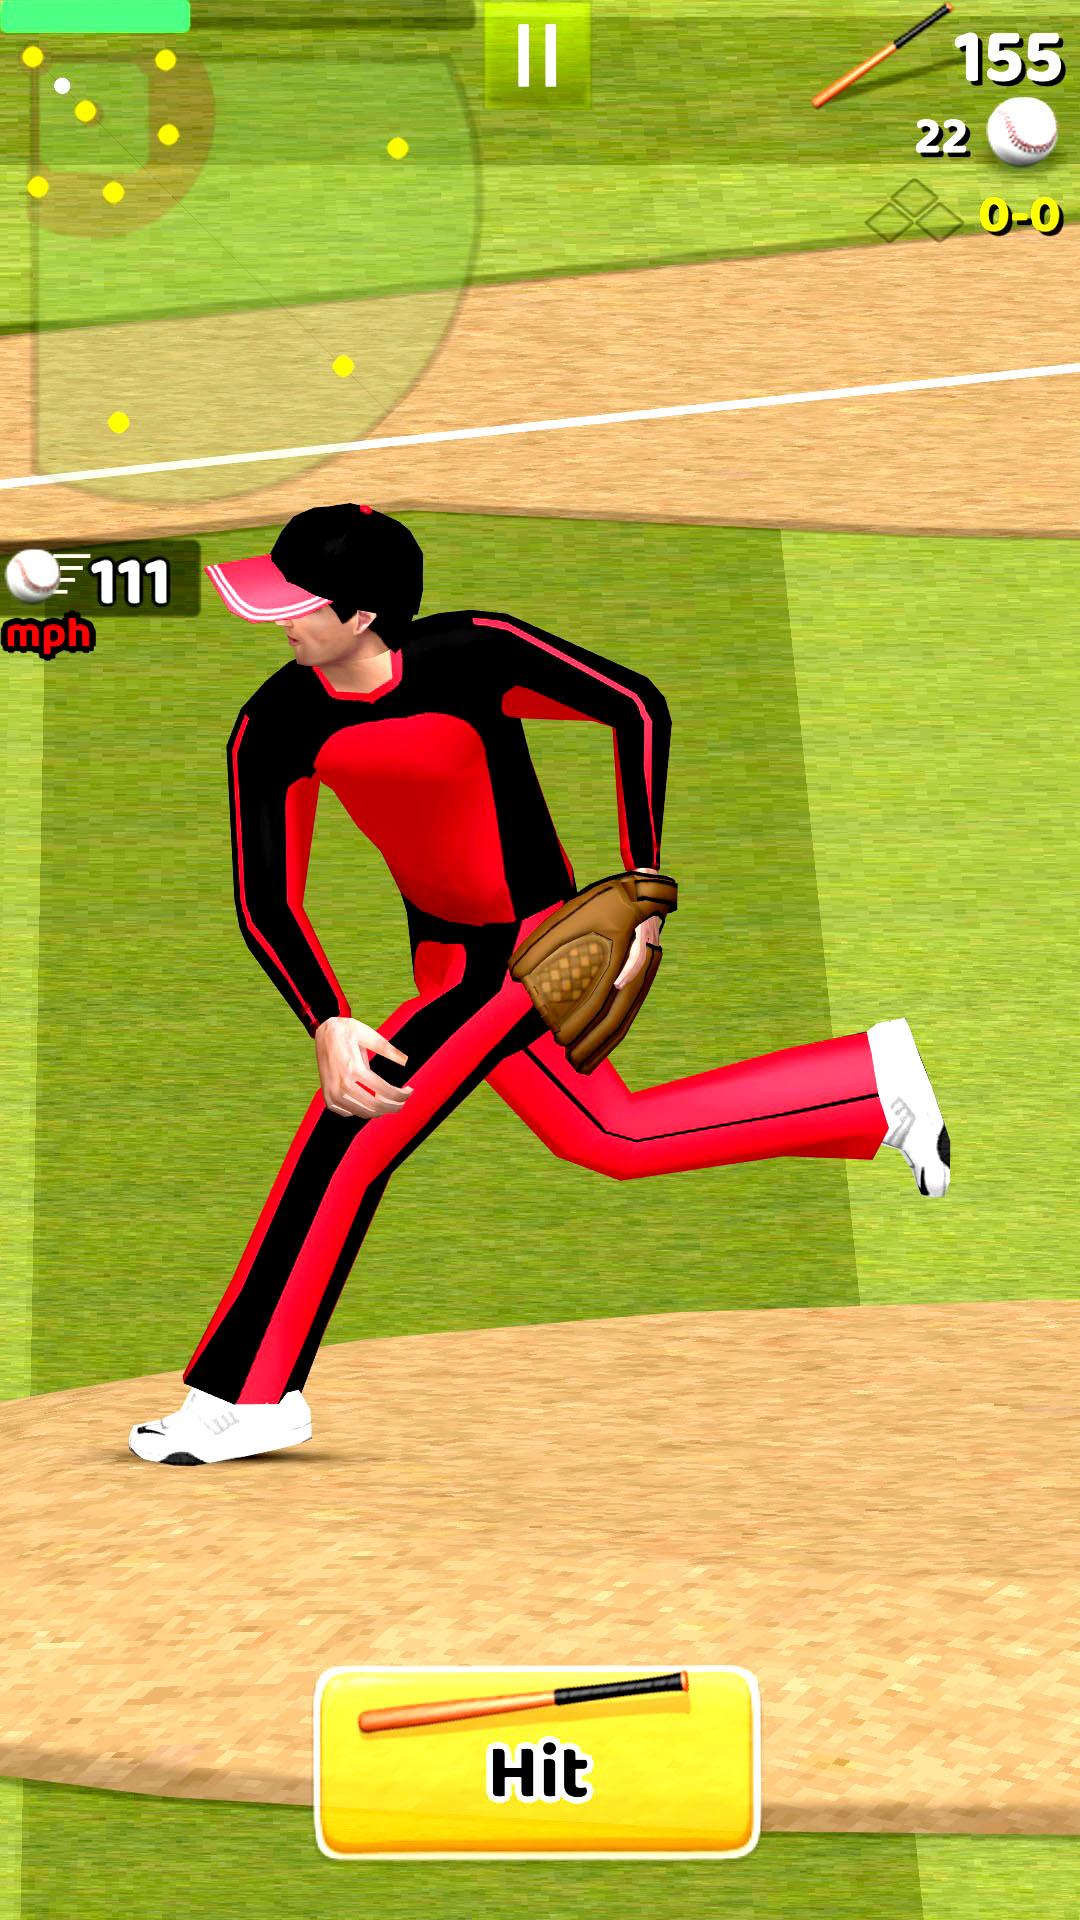 Smashing Baseball a baseball game like none other 1.0.6 Screenshot 4